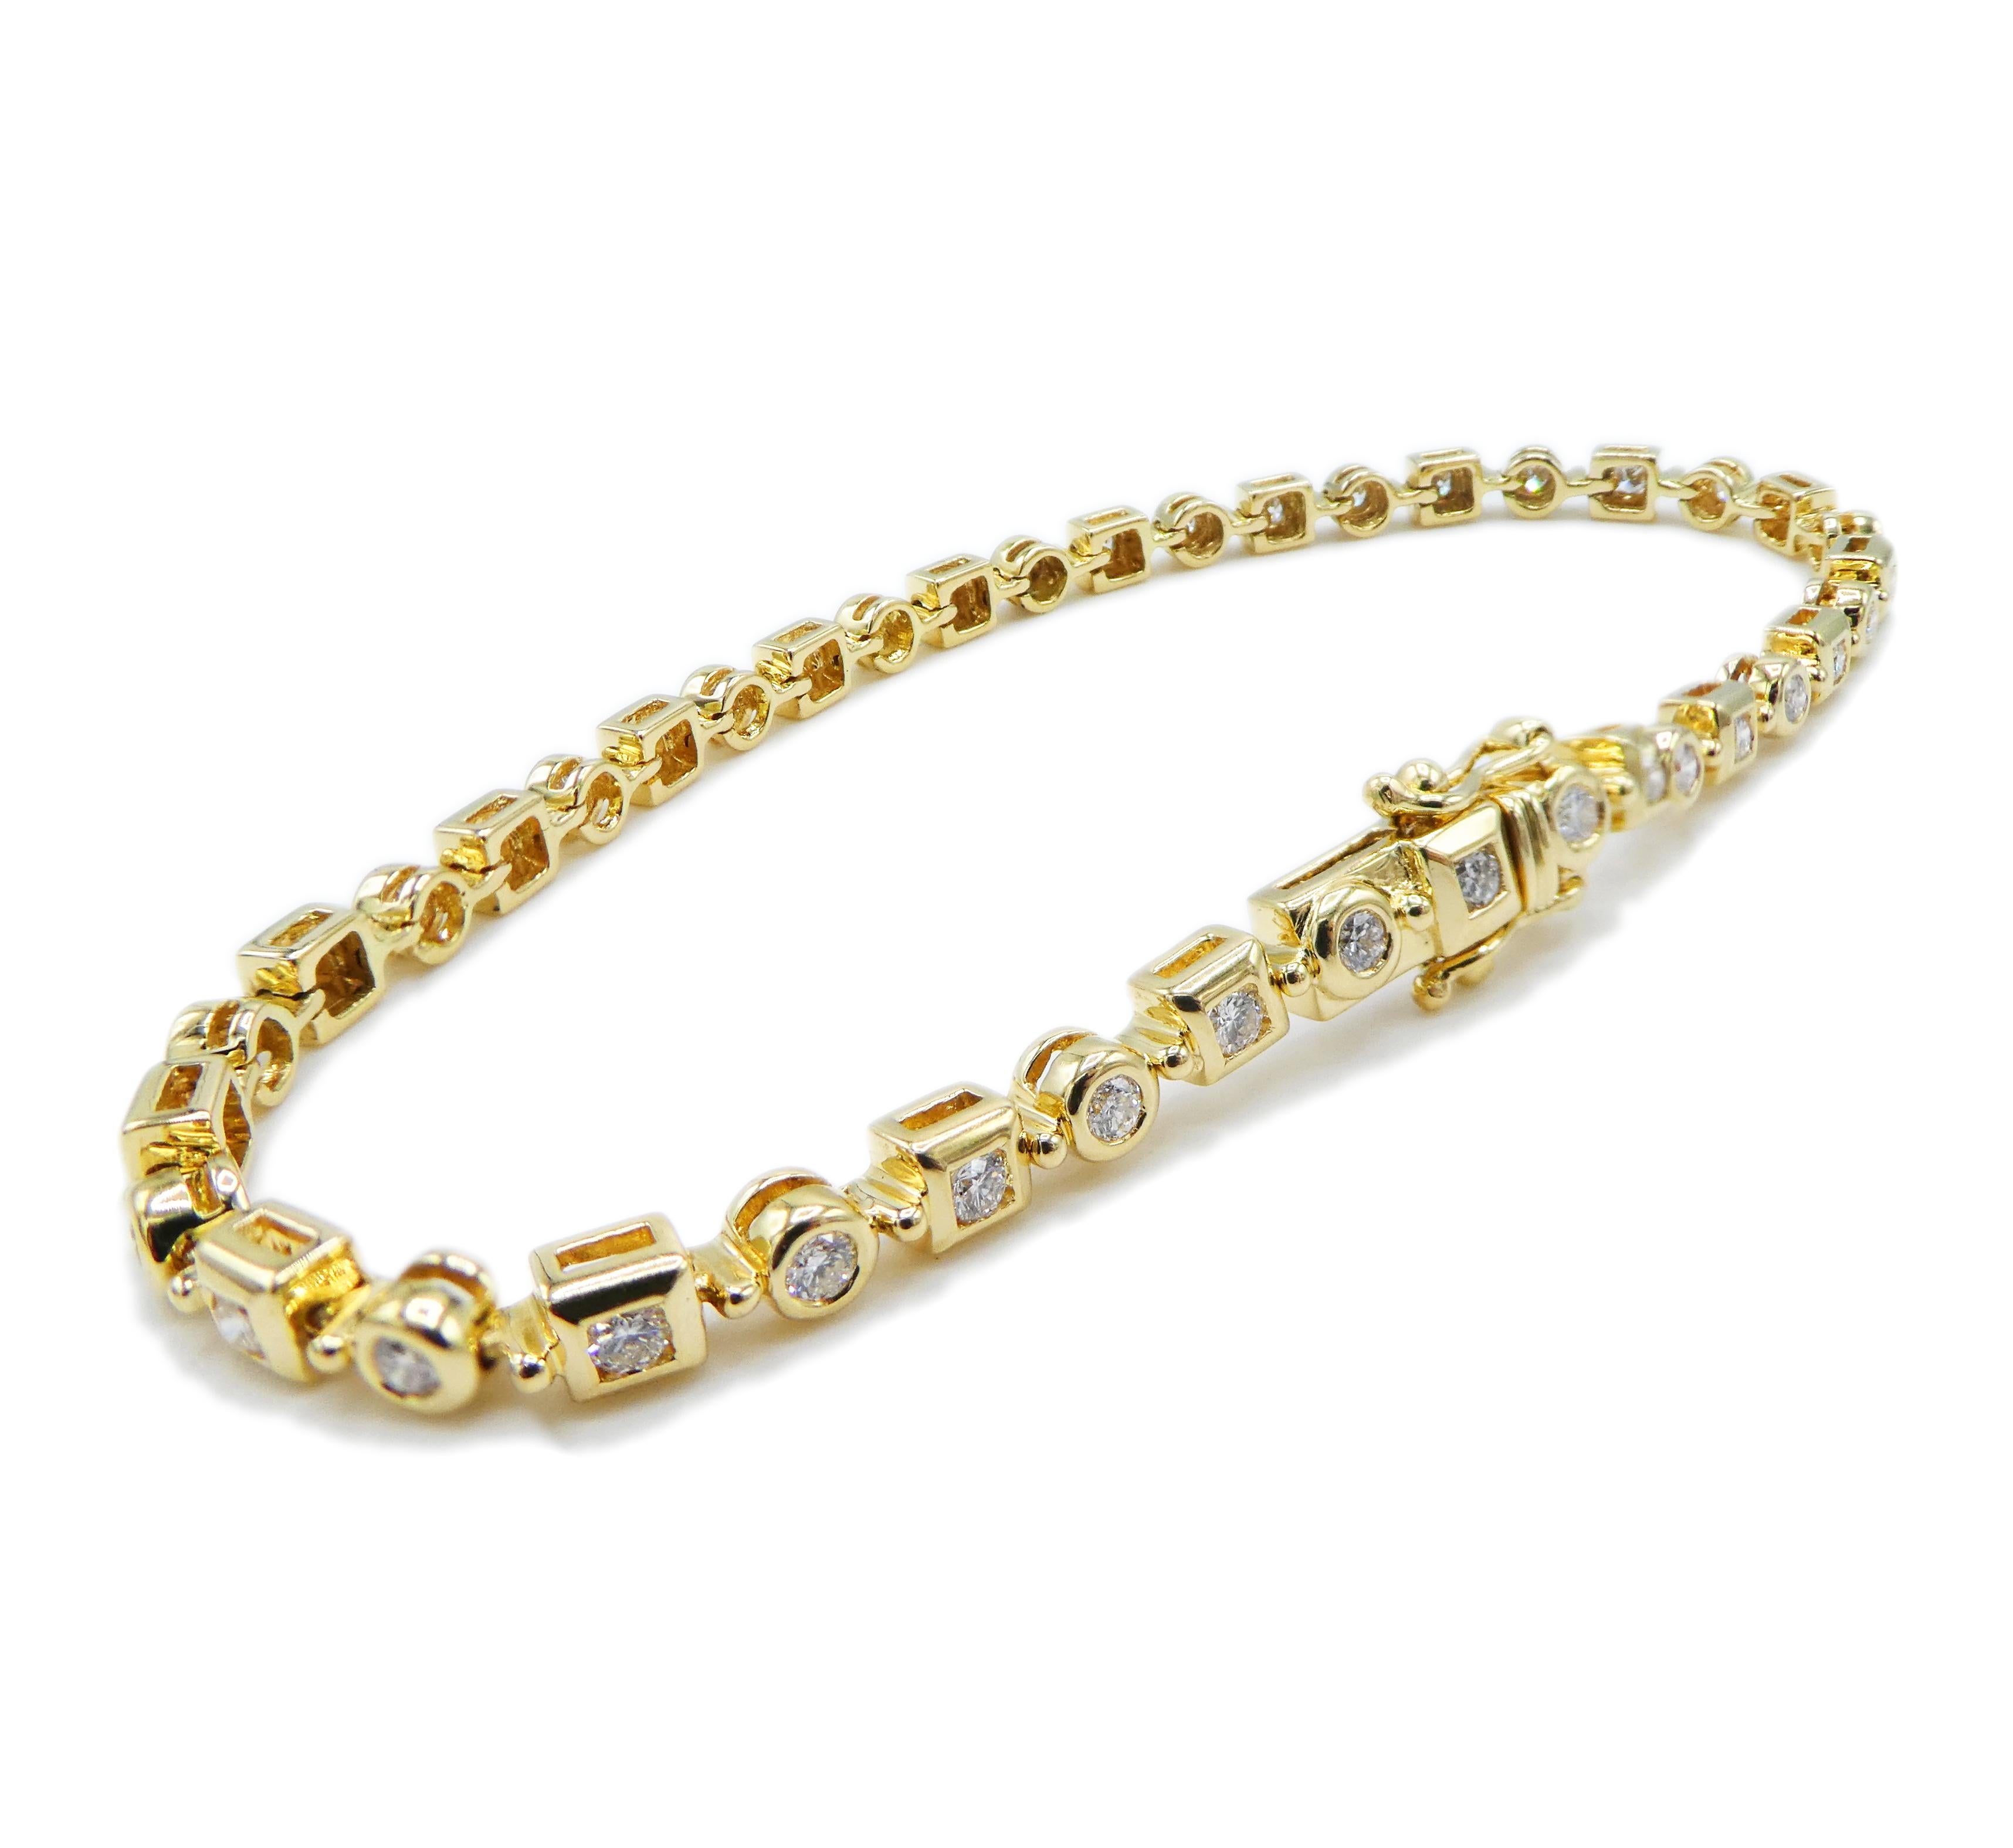 1.00 Carat Diamond 18 Karat Yellow Gold Tennis Bracelet Round Brilliant  Art Deco Style

Metal: 18K Yellow Gold 750
Weight: 11.35 grams
Diamonds: Approx 1.00 CTW (40 round brilliant cut diamonds) G-H VS-SI
Length: 7 inches
Markings: stamped